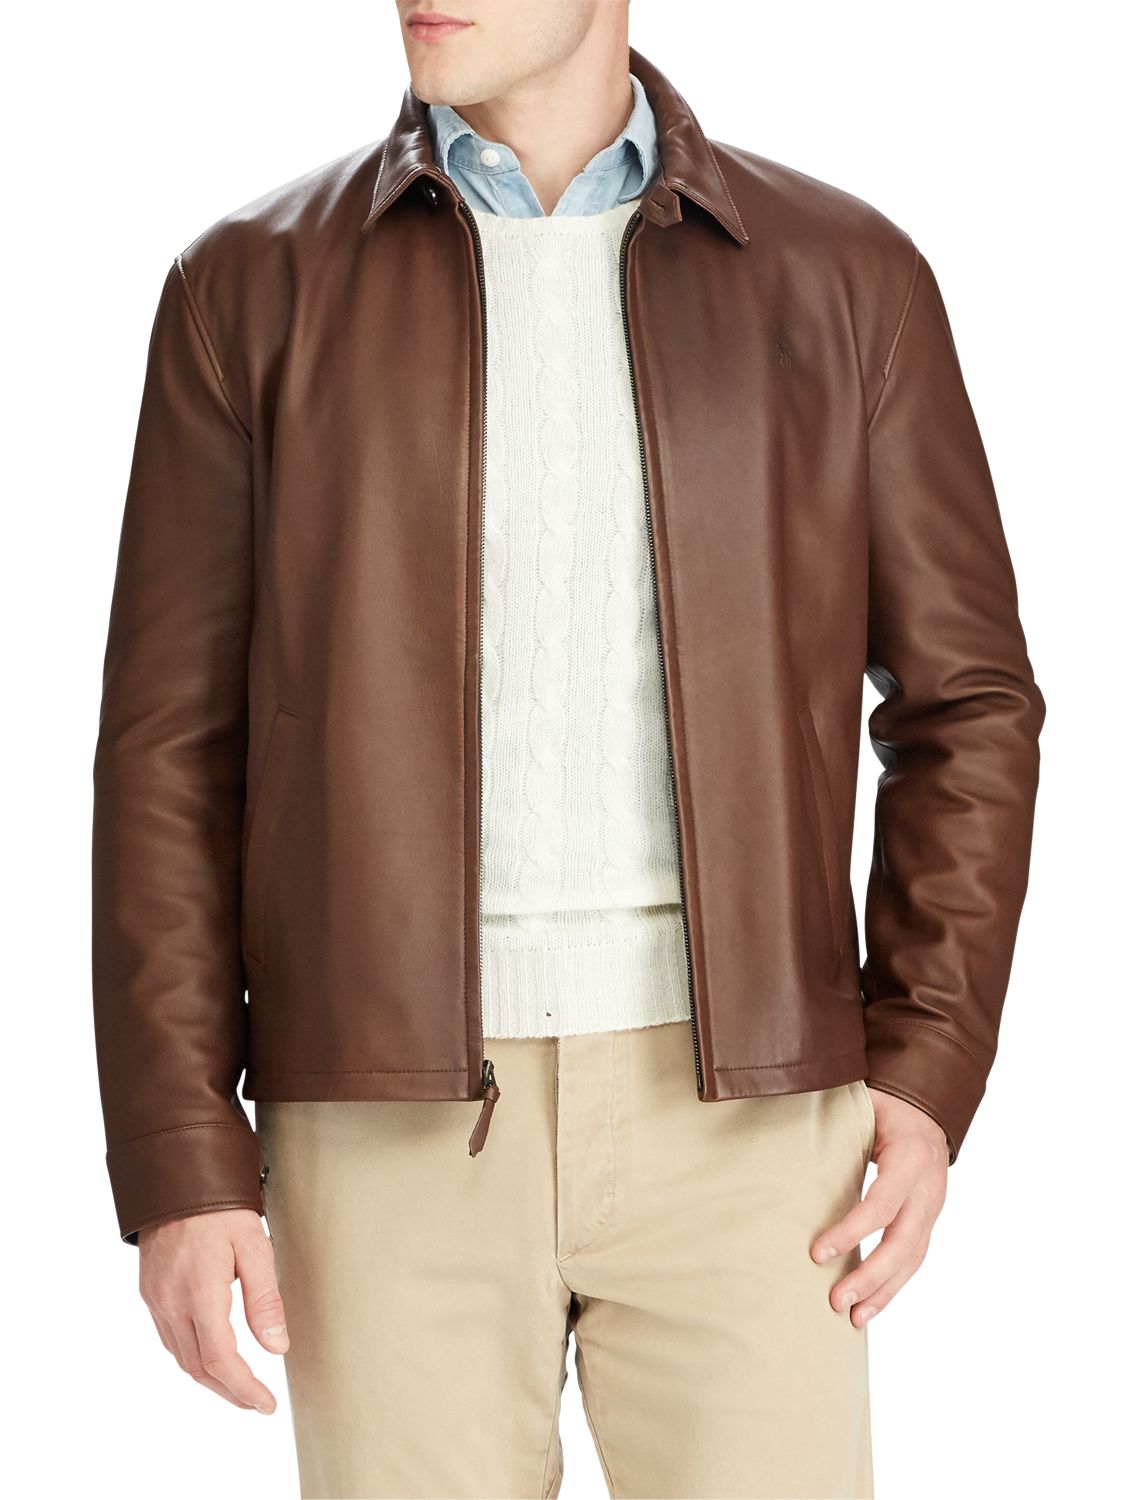 polo ralph lauren maxwell leather jacket